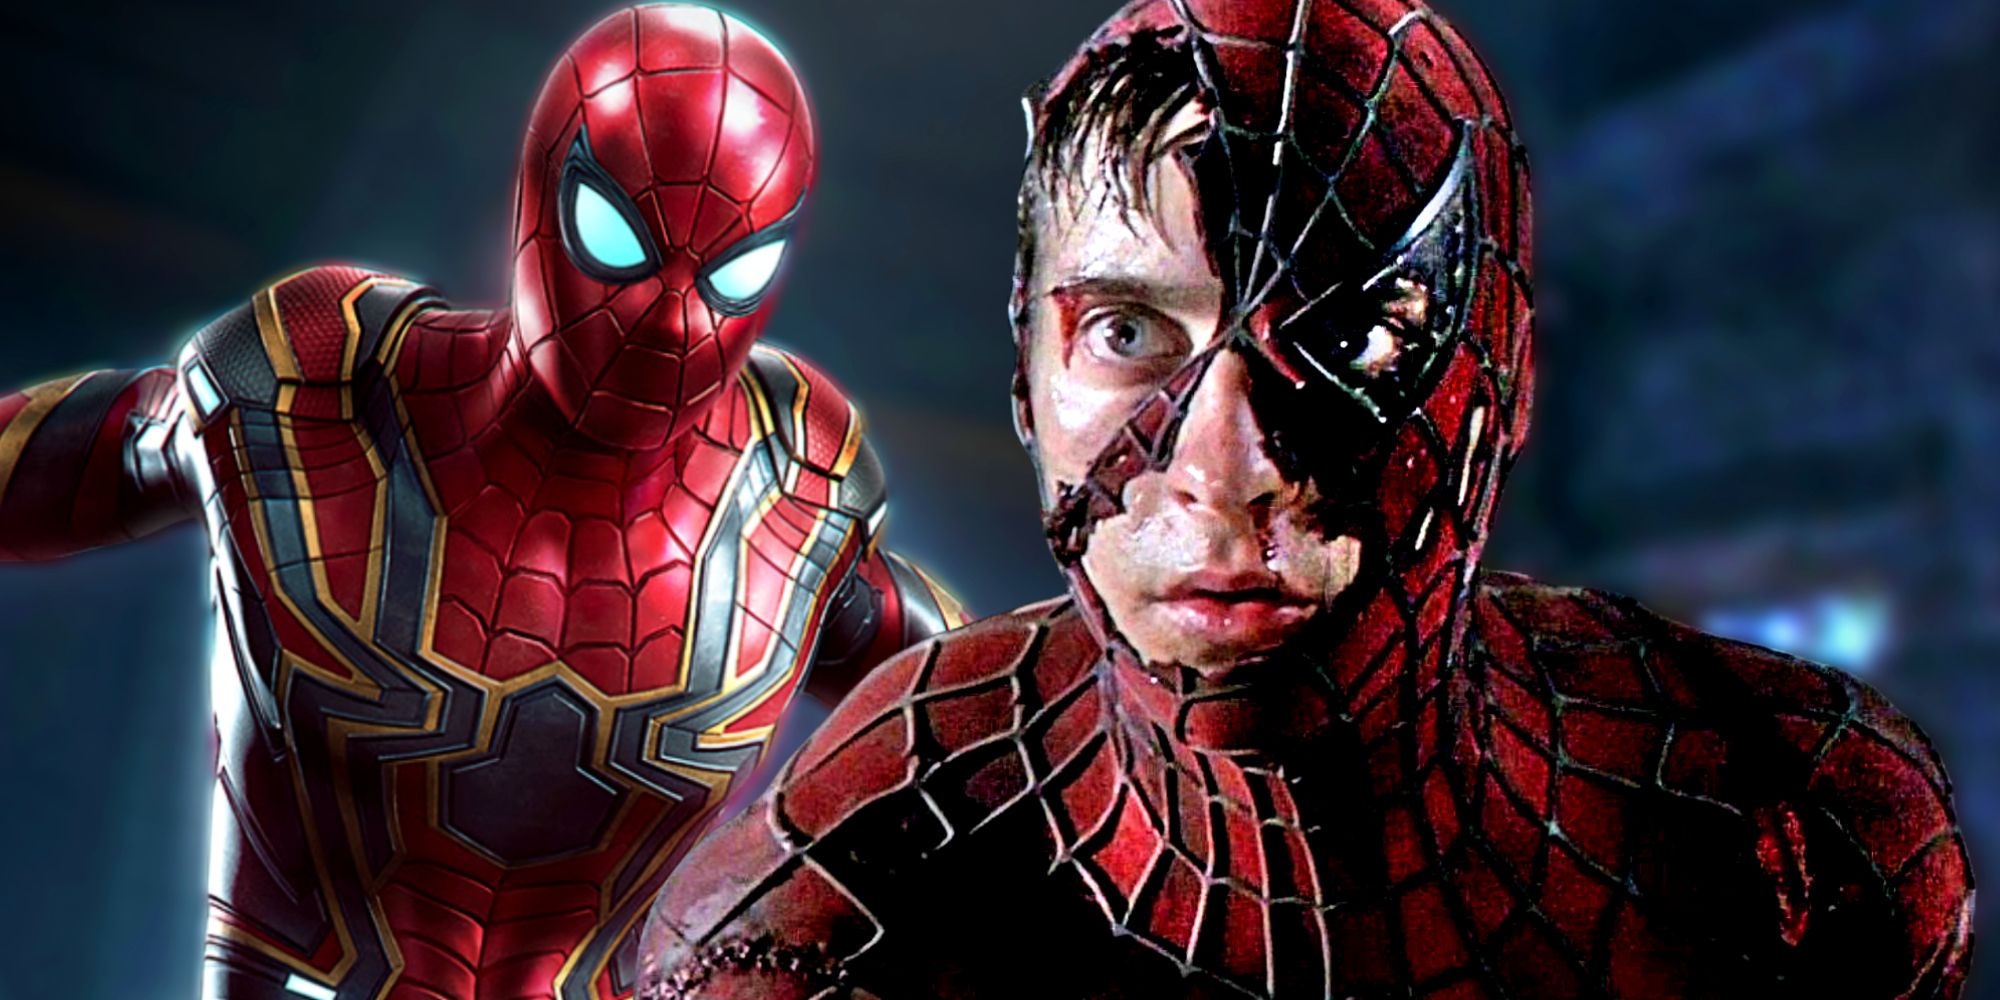 Spider-Man 4 Can Finally Make Good On Tom Holland’s Superhero Suit Regret